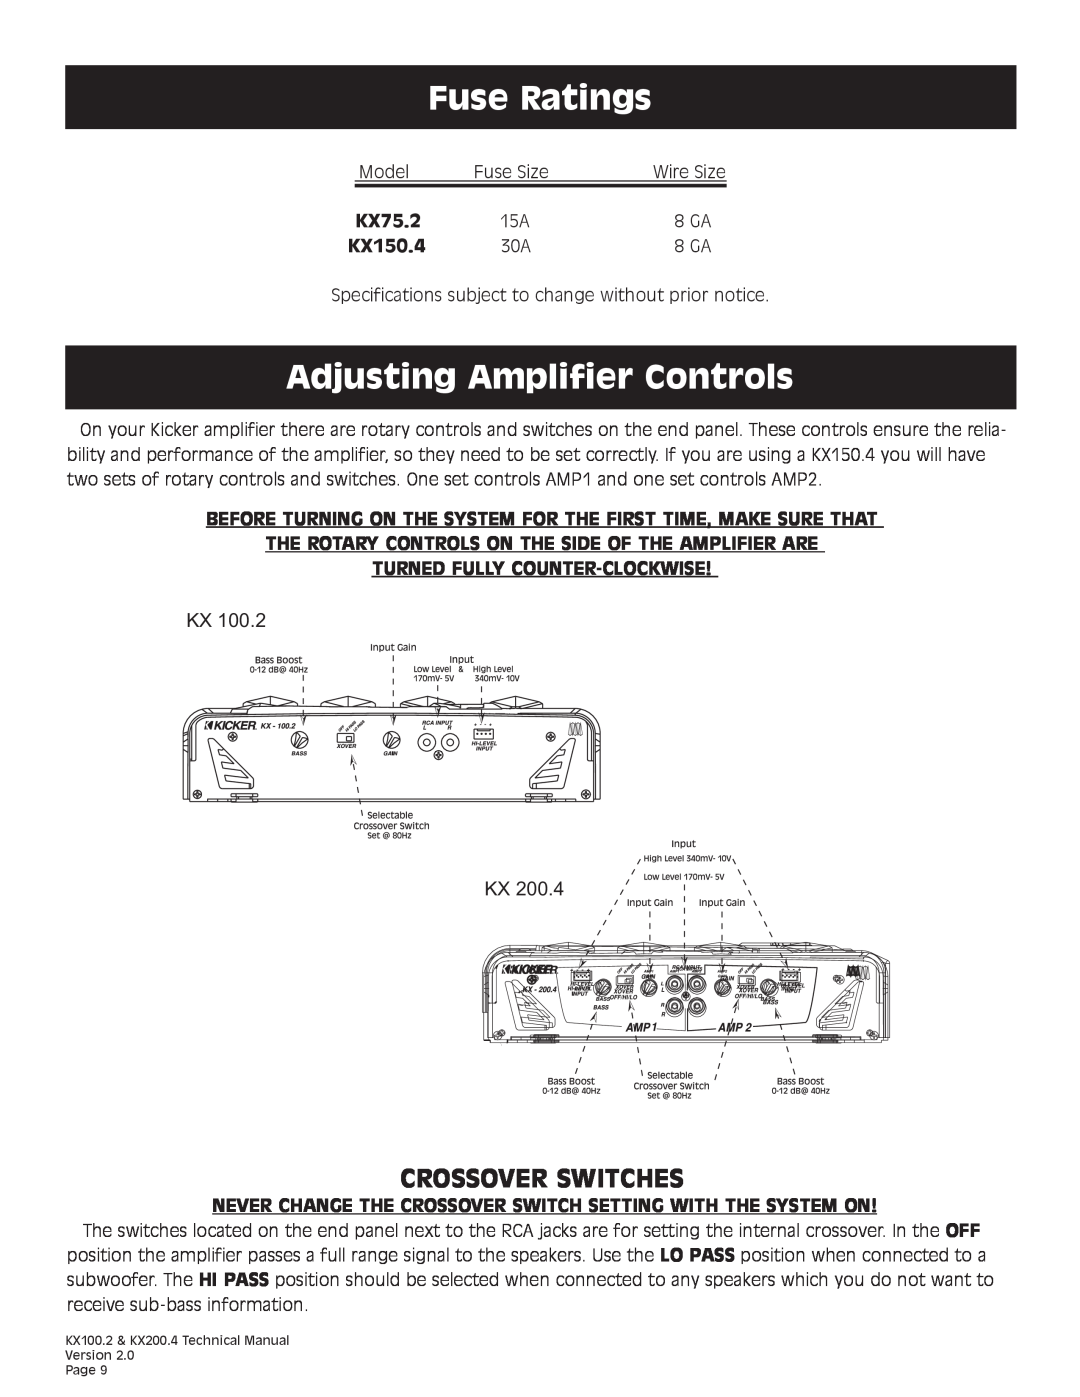 Kicker KX200.4 technical manual Fuse Ratings, Adjusting Amplifier Controls, Crossover Switches, Kx Kx, KX75.2, KX150.4 